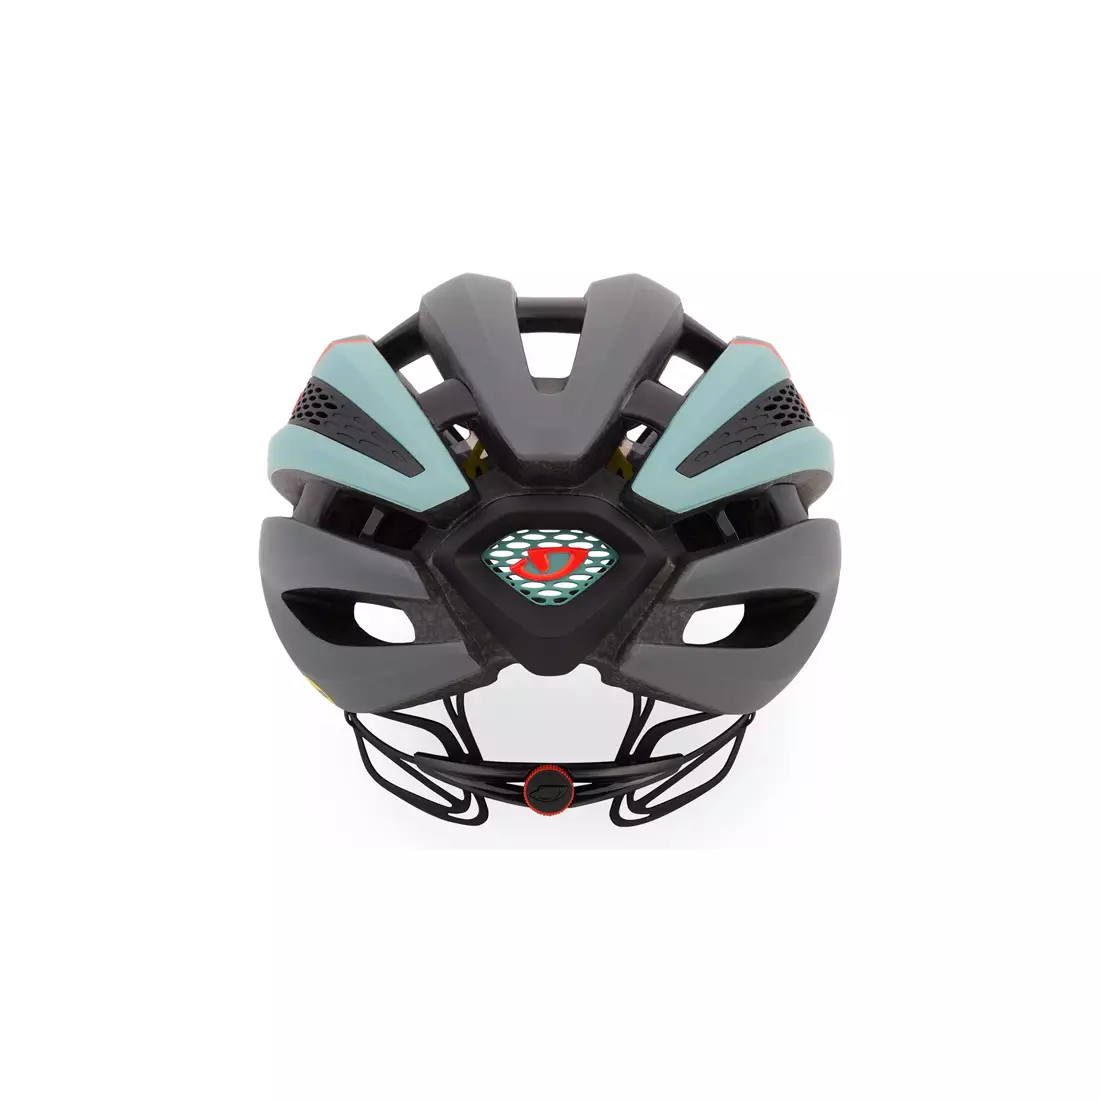 Cyklistická helma GIRO SYNTHE matte charcoal frost 